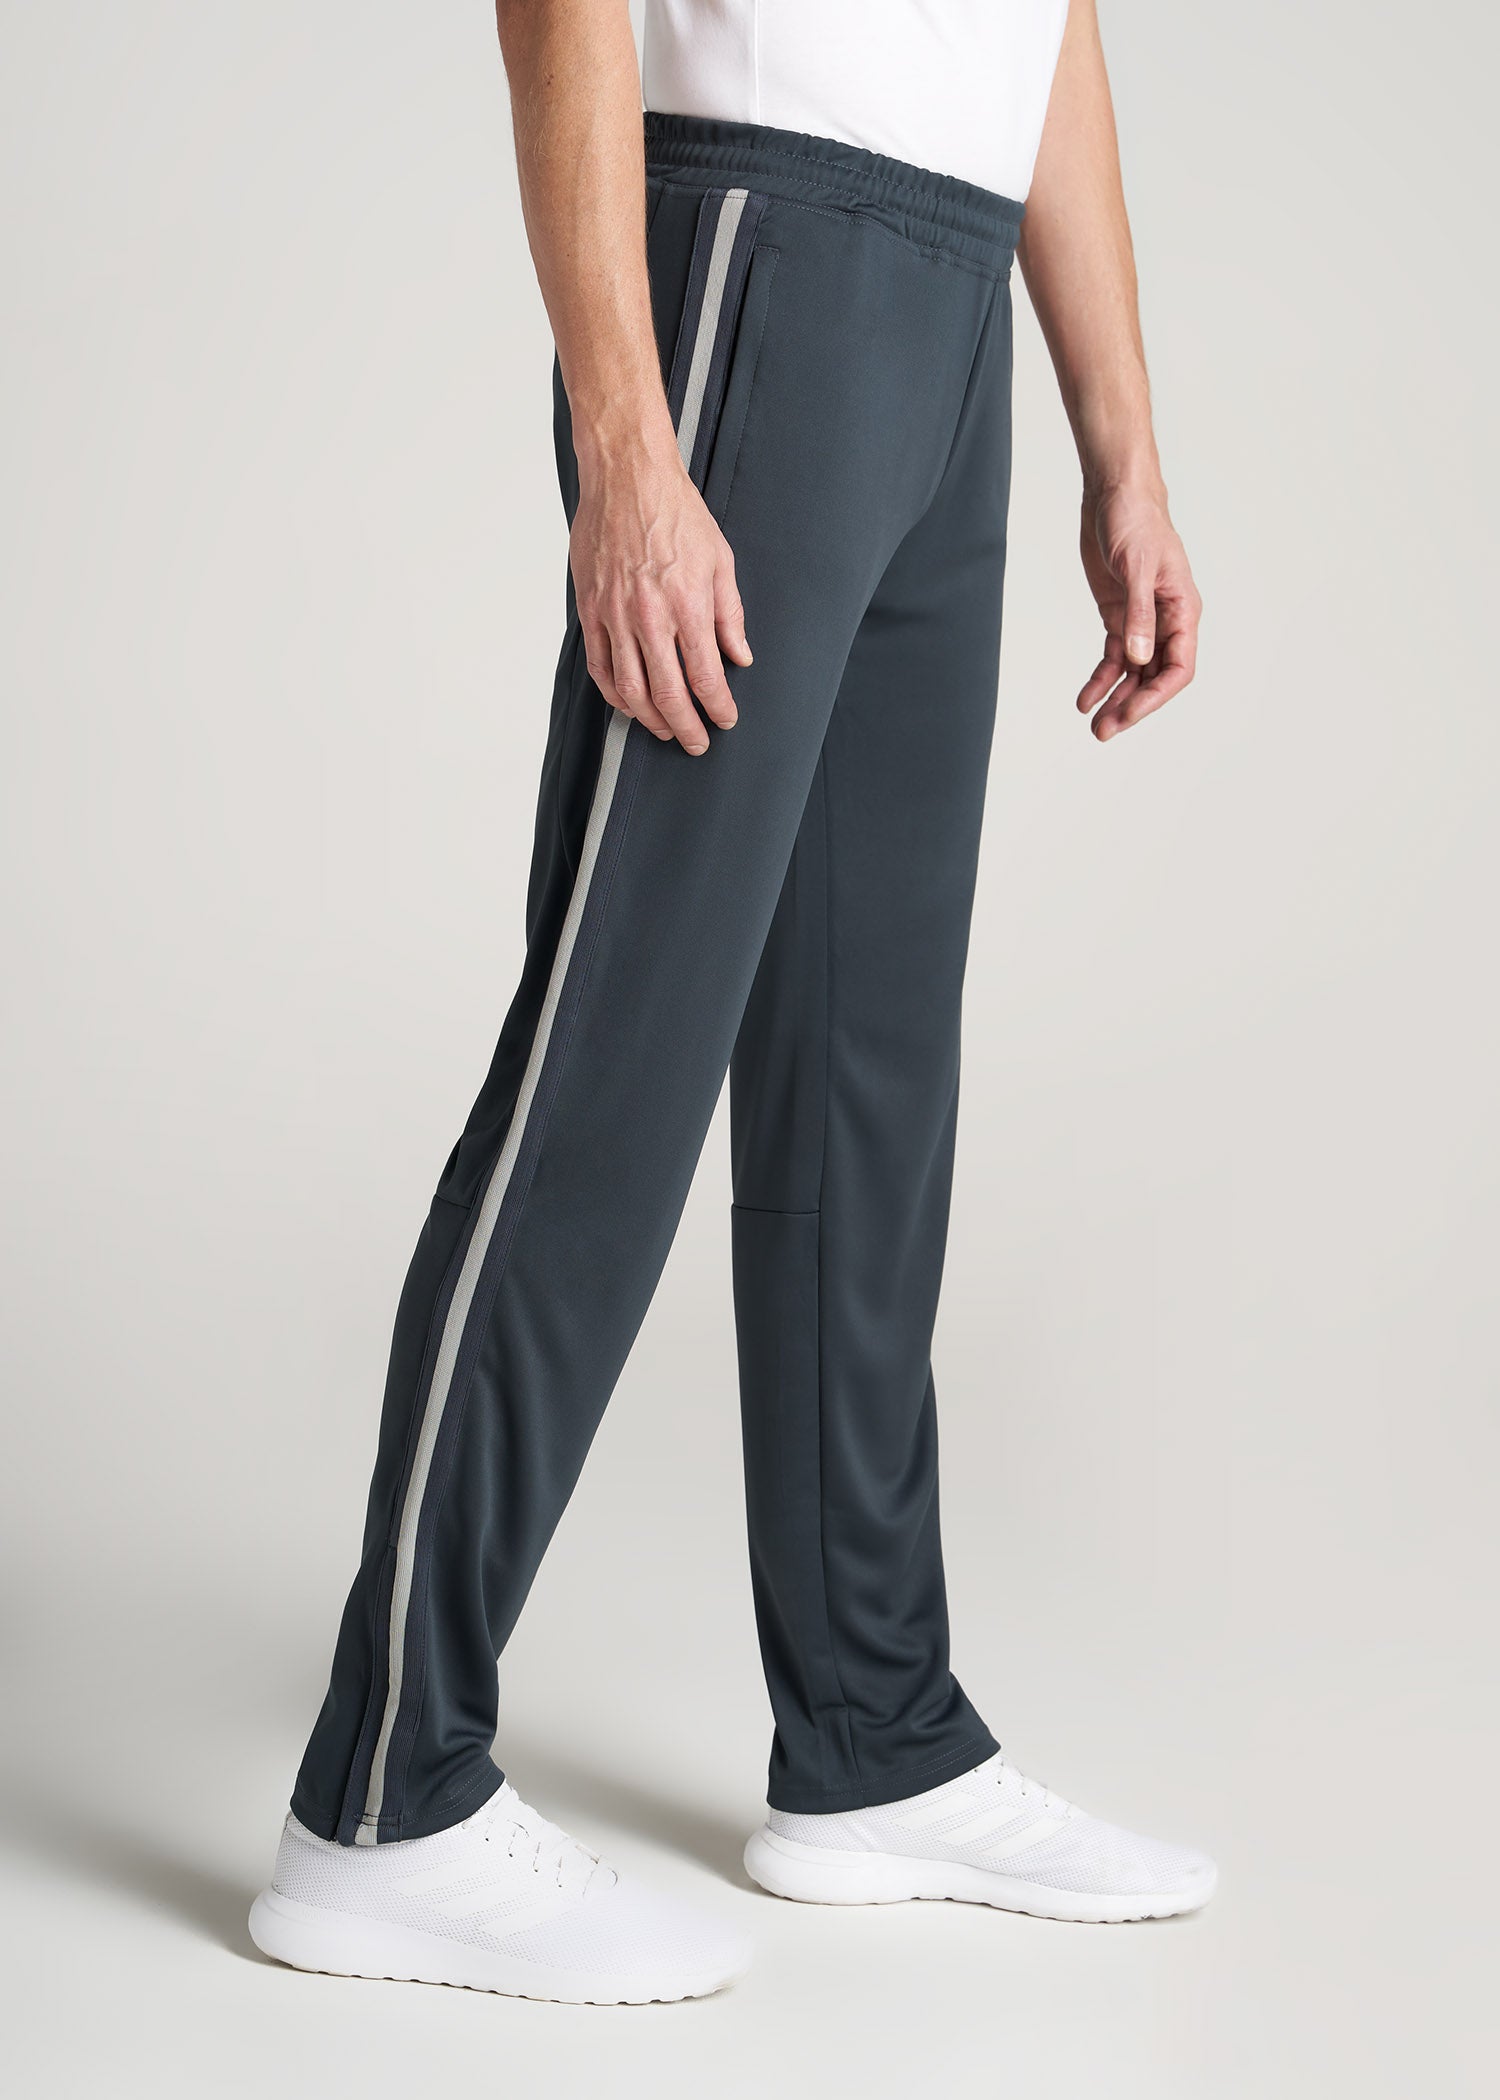 Tall Gym Pants: Grey Stripe Pant For Tall Men